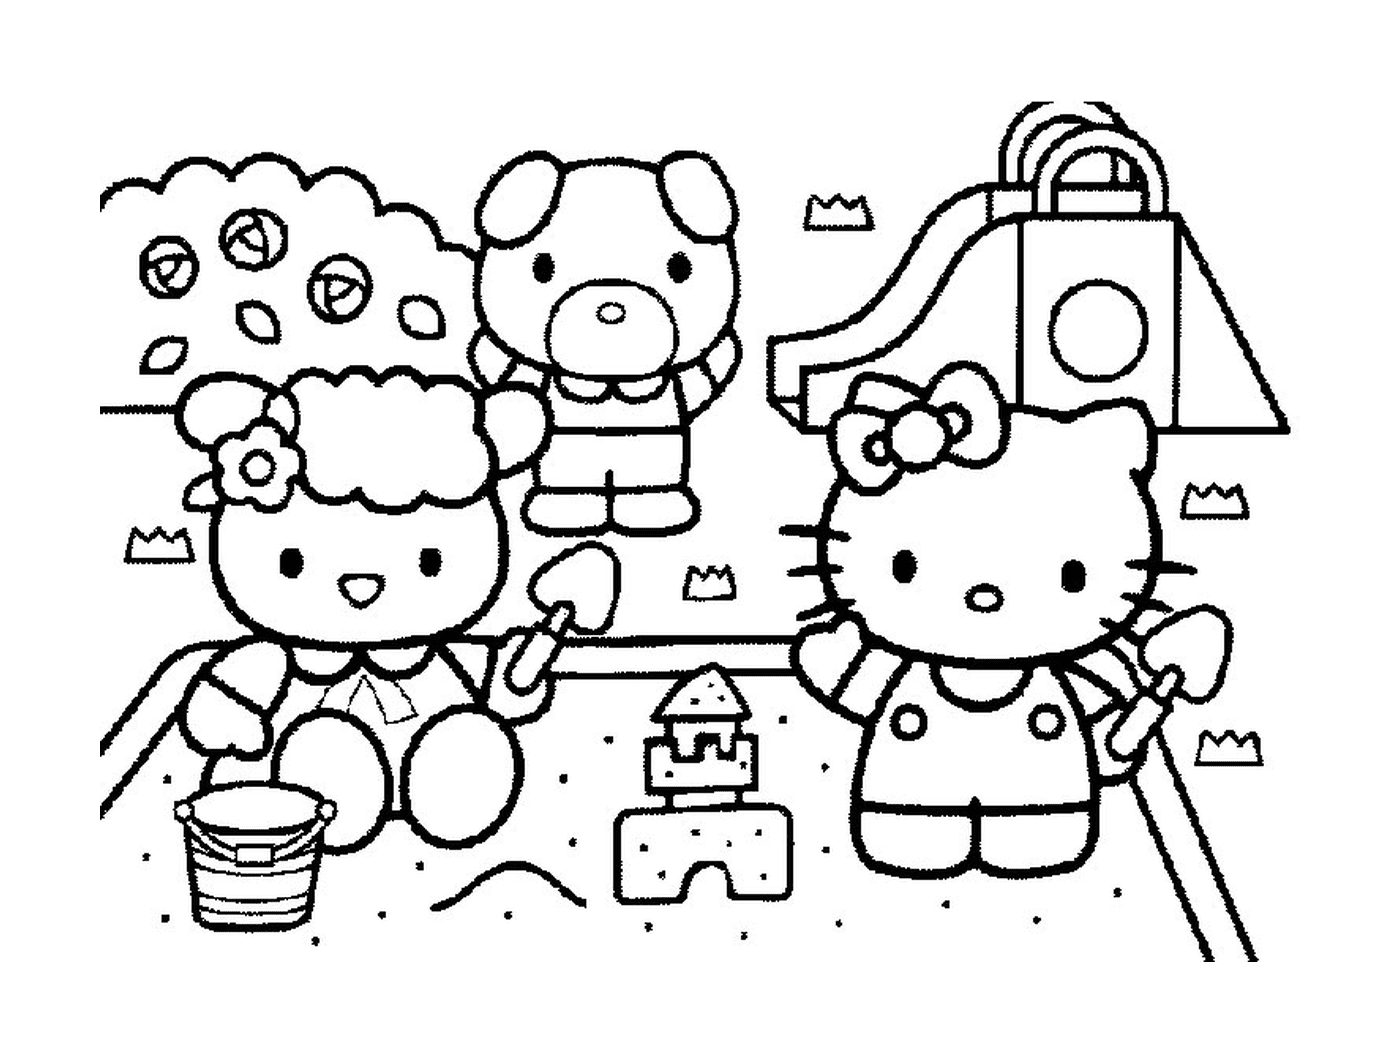   Groupe de Hello Kitty et ours en peluche 